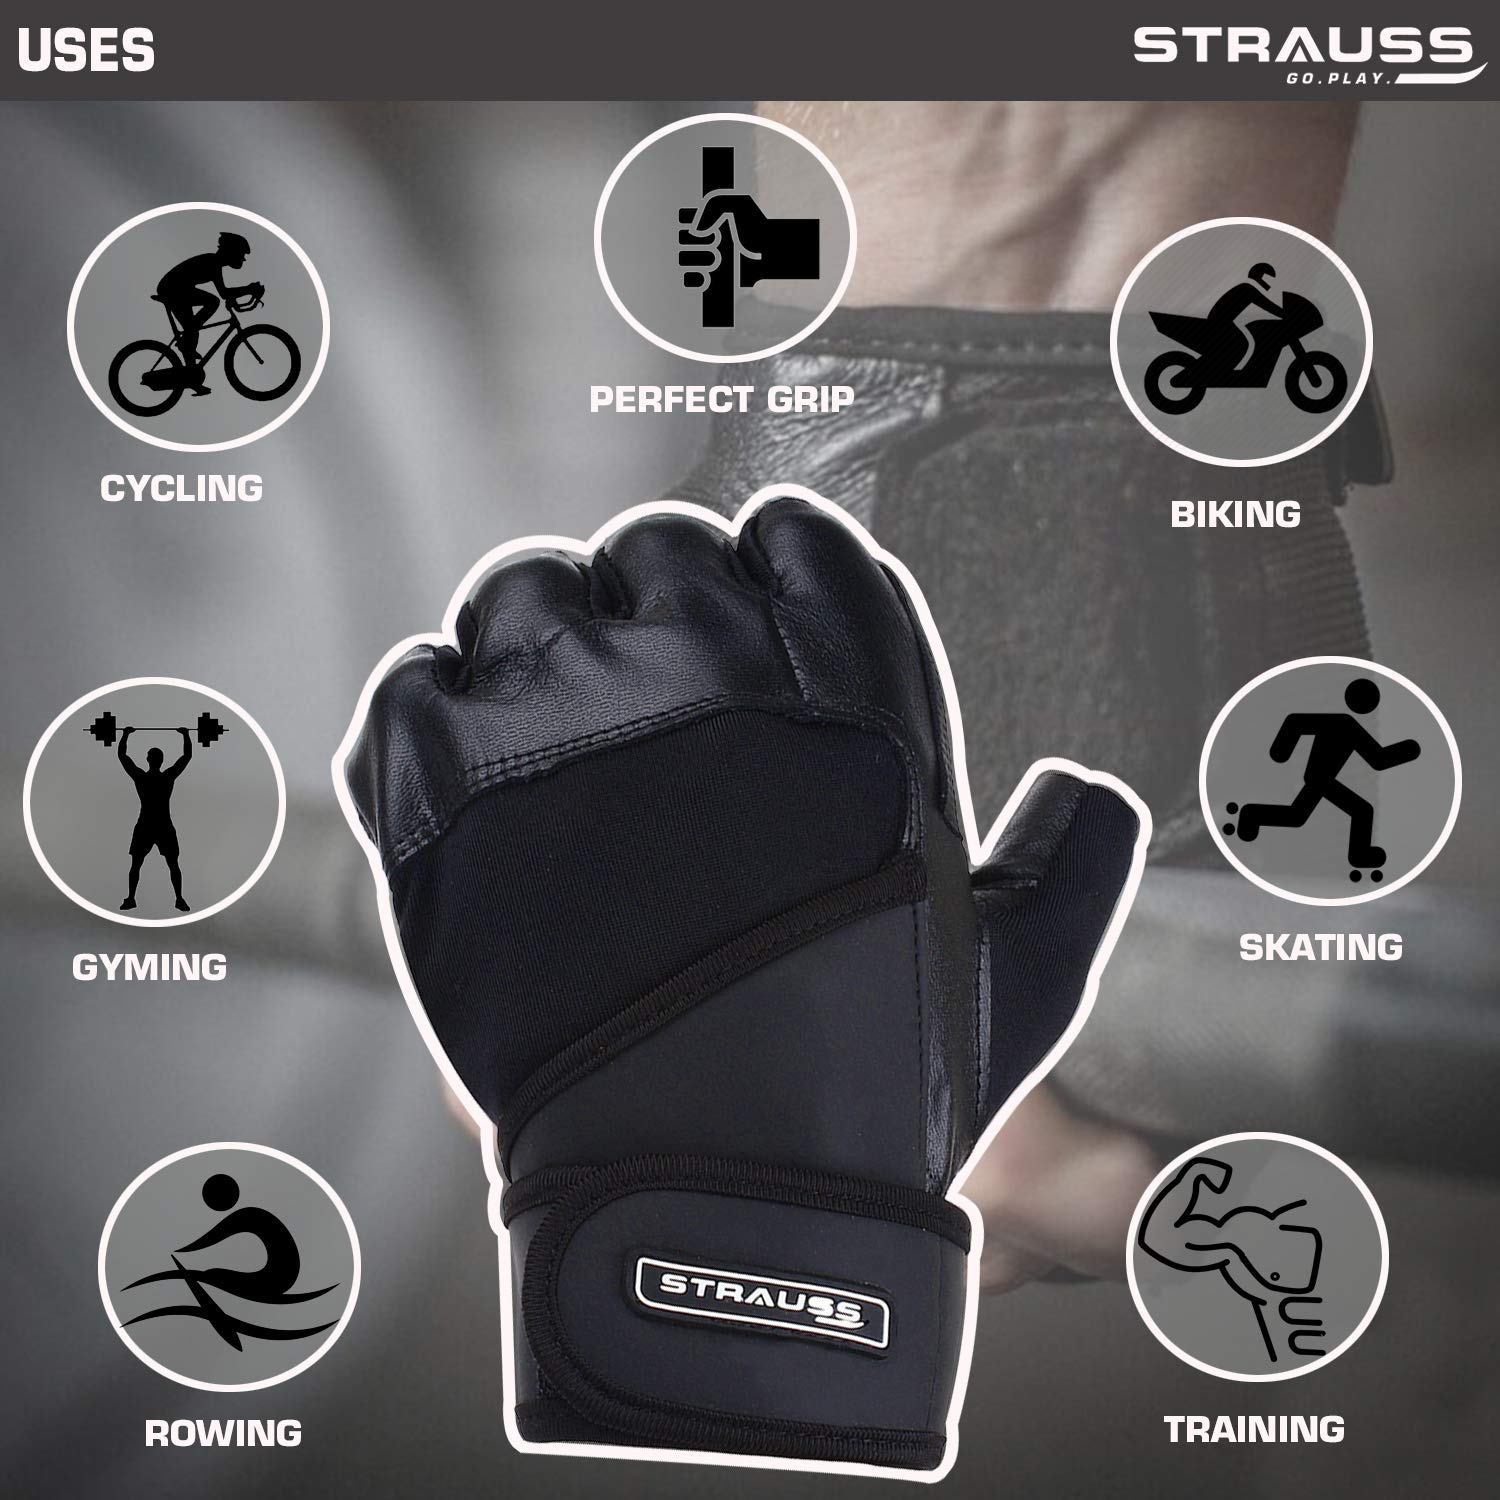 STRAUSS Leather Gym Gloves with Wrist Wrap (Medium)